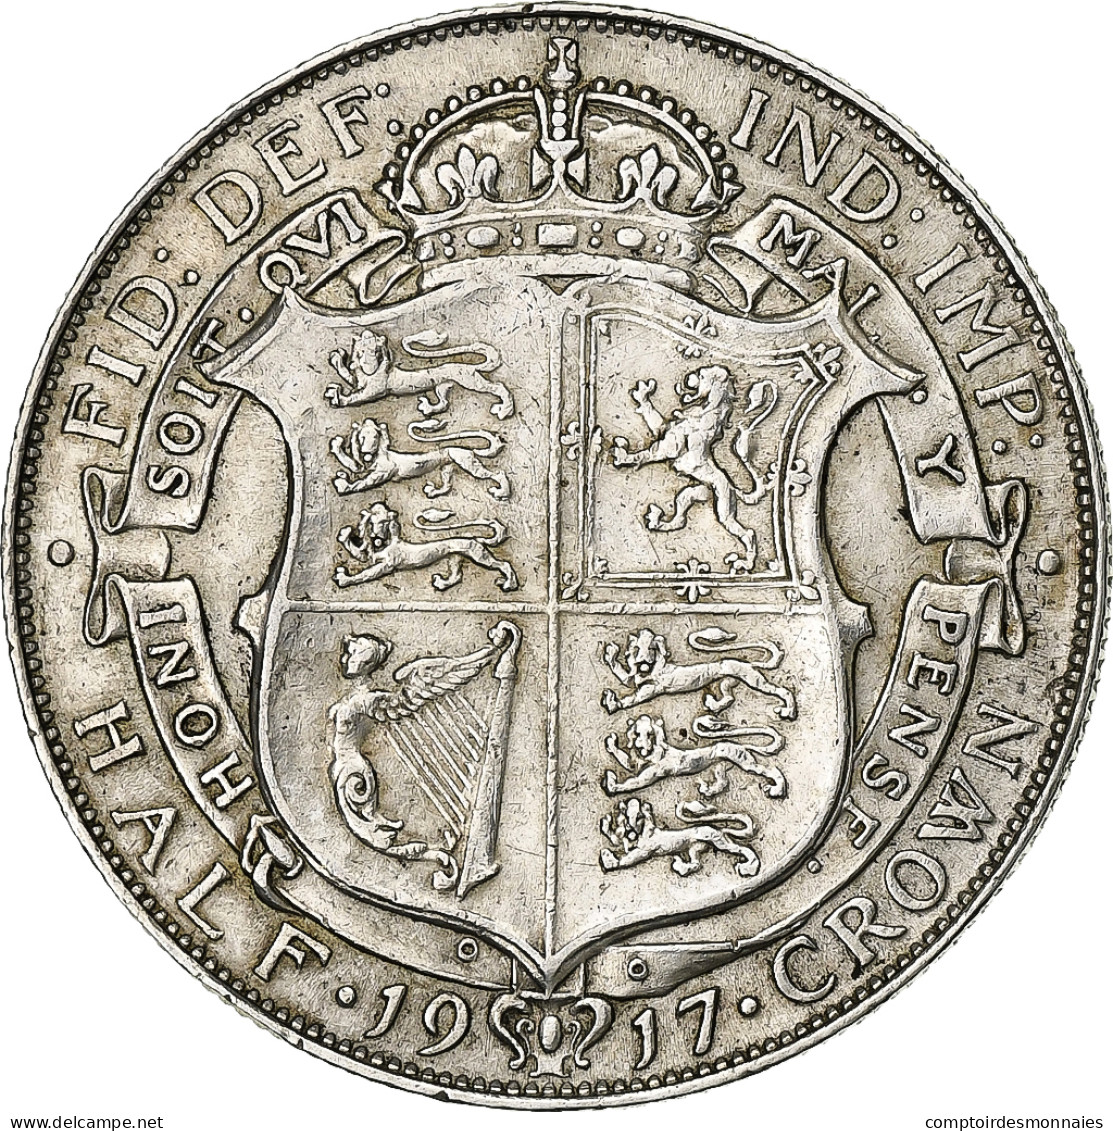 Monnaie, Grande-Bretagne, George V, 1/2 Crown, 1917, TTB+, Argent, KM:818.1 - K. 1/2 Crown